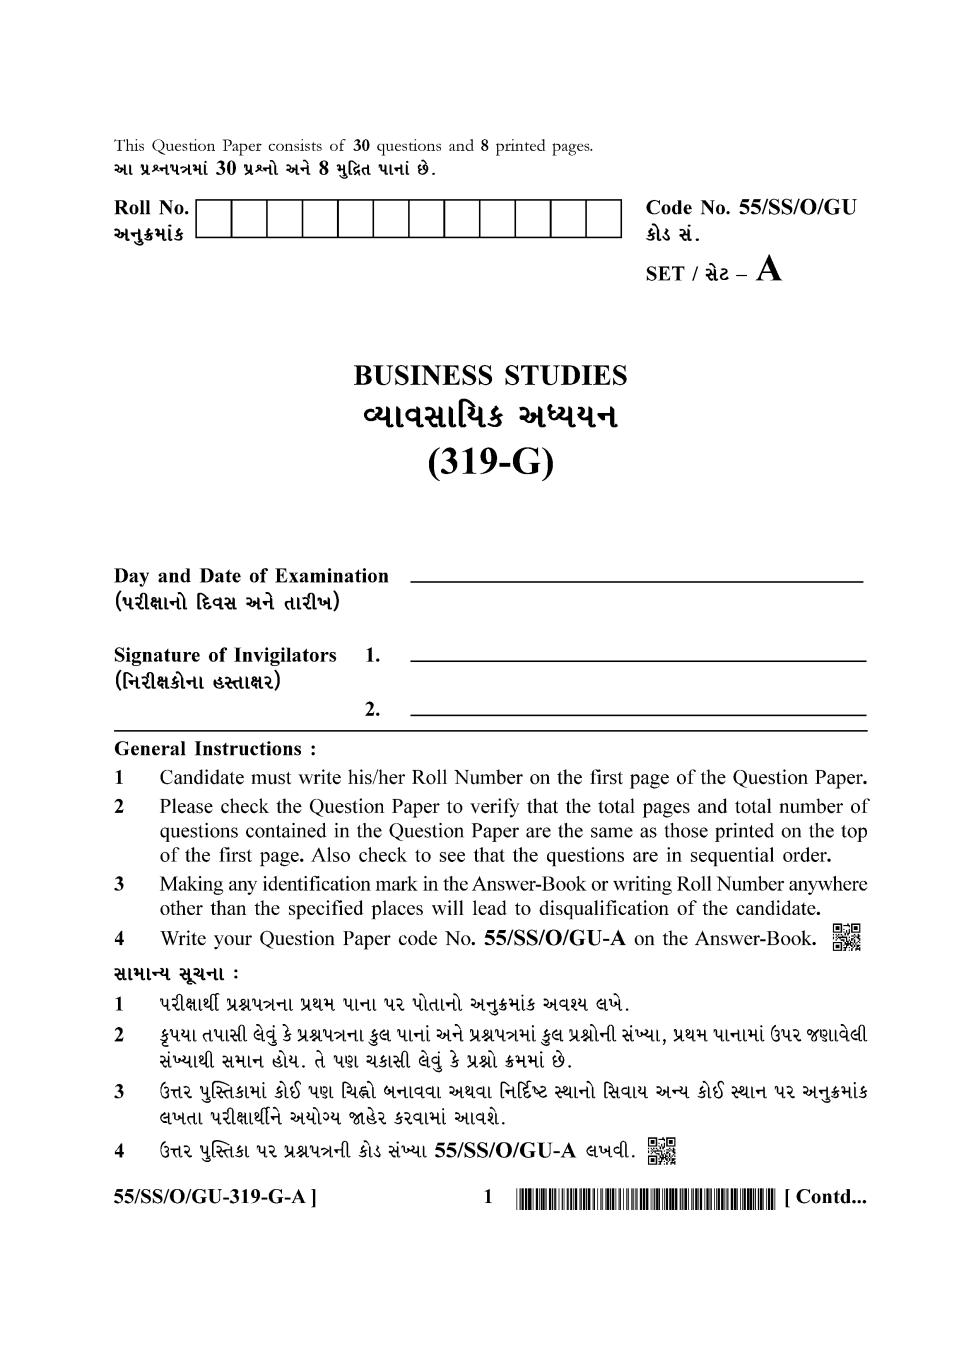 NIOS Class 12 Question Paper Oct 2017 - Business Studies - Page 1